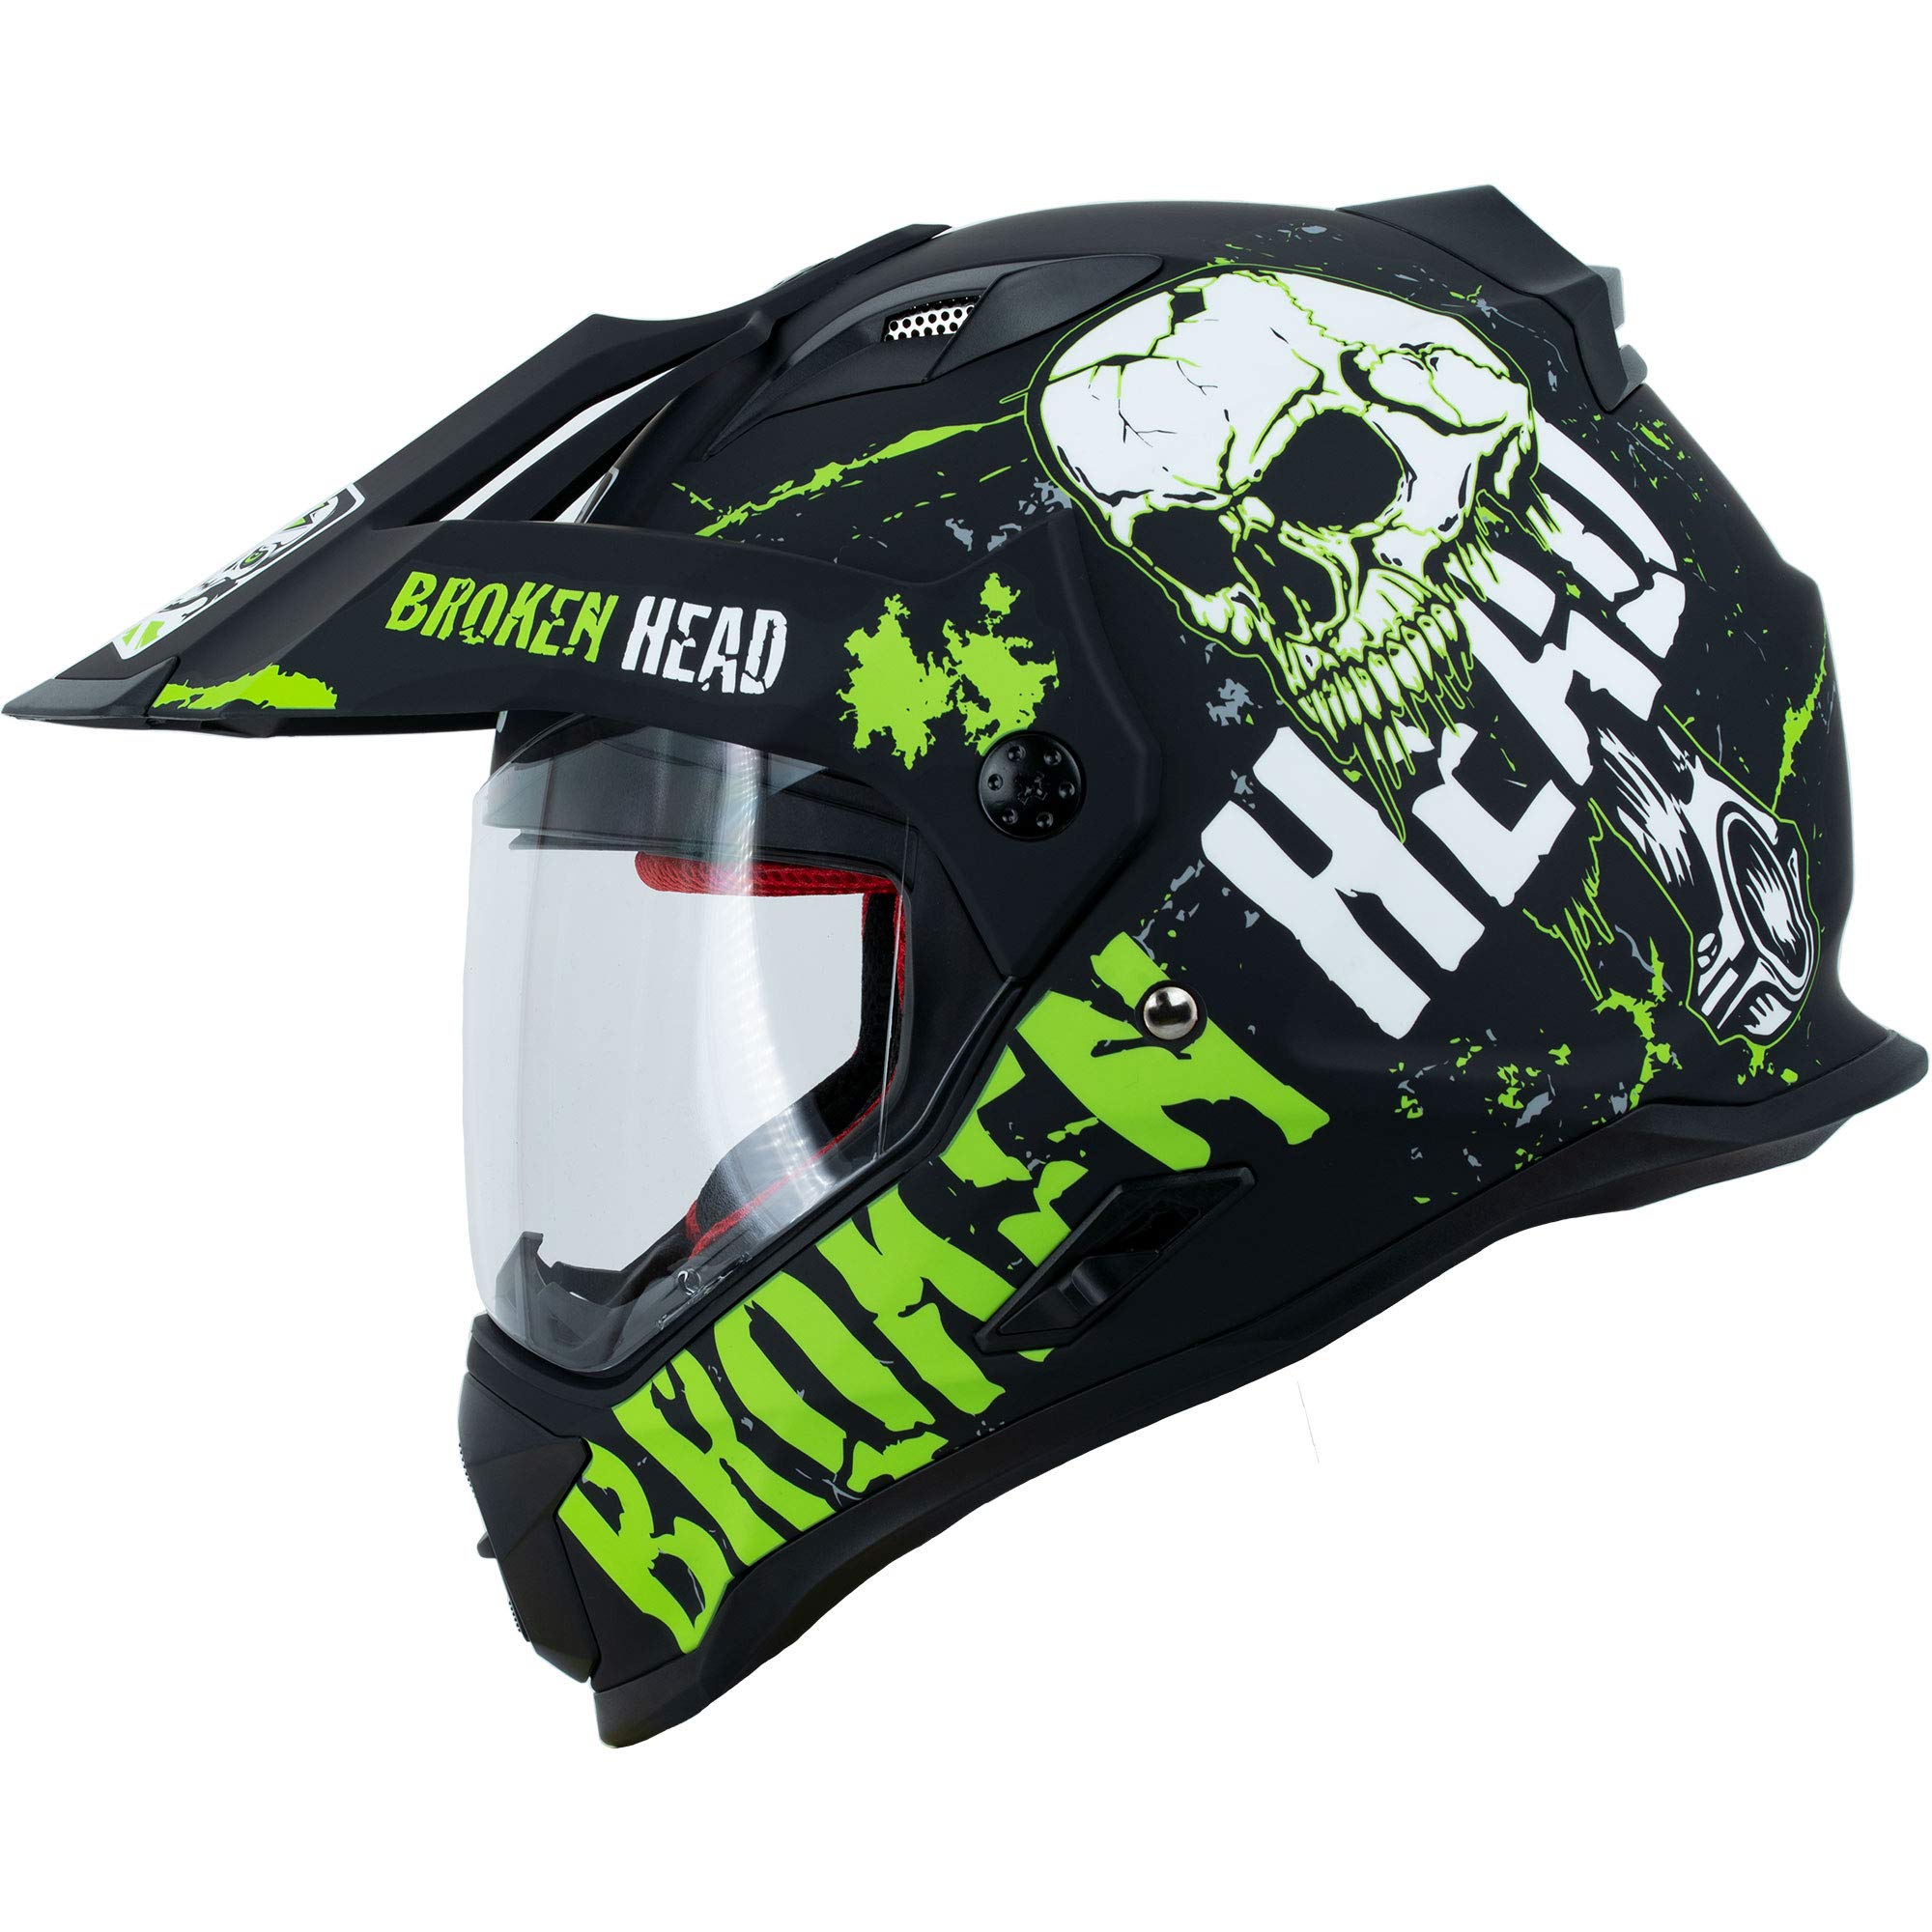 Broken Head Bone Crusher Motocross-Helm Grün mit Visier - Enduro MX Cross-Helm - Motorradhelm mit Sonnenblende (L 59-60 cm)